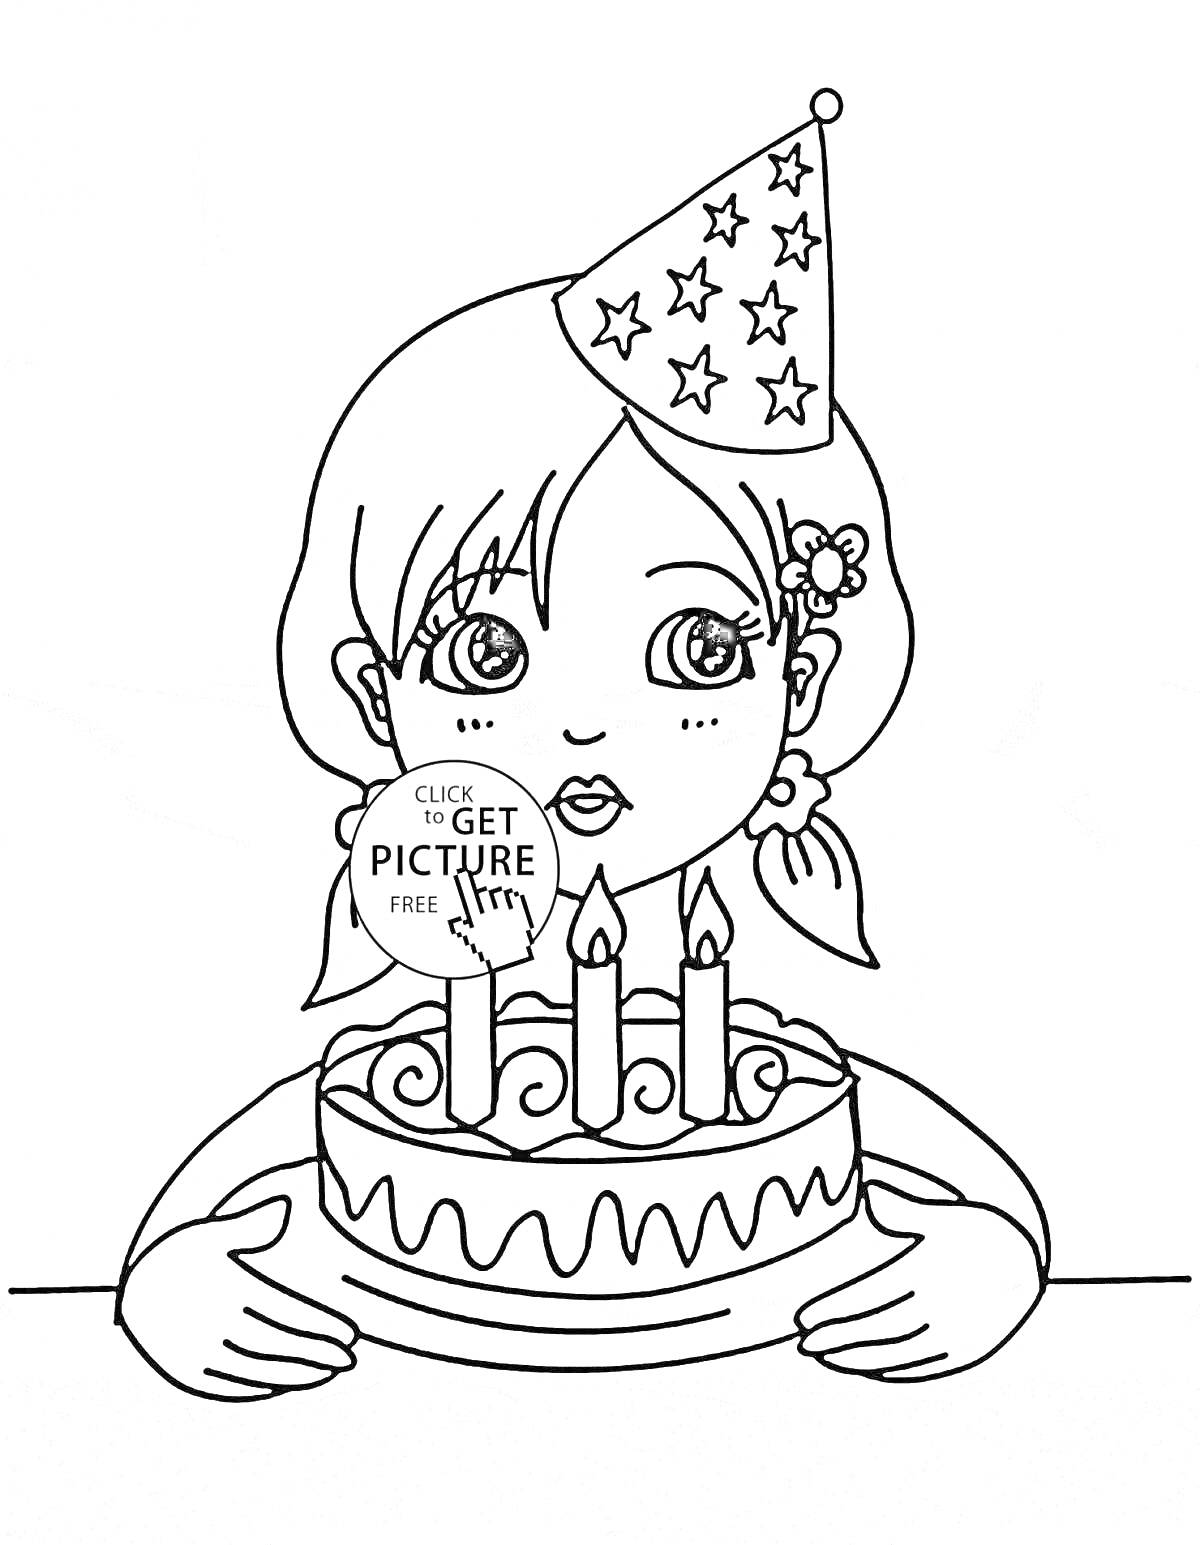 Раскраска Девочка в колпаке с тремя свечами на торте